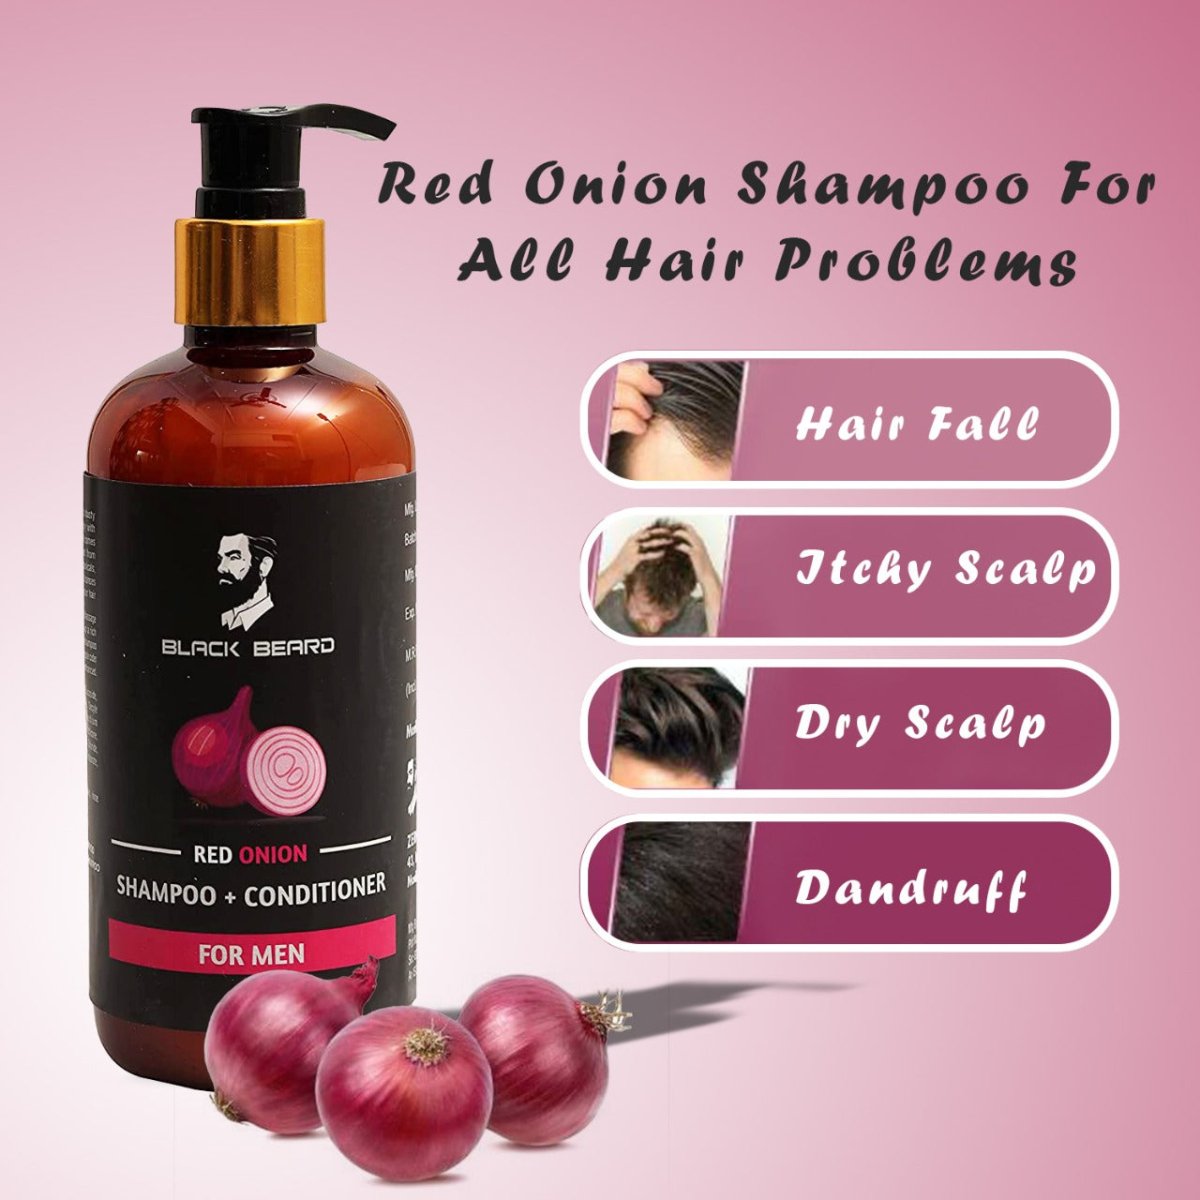 
                  
                    Black Beard Red Onion Shampoo and Conditioner (300ml) - Kreate- Shampoos
                  
                